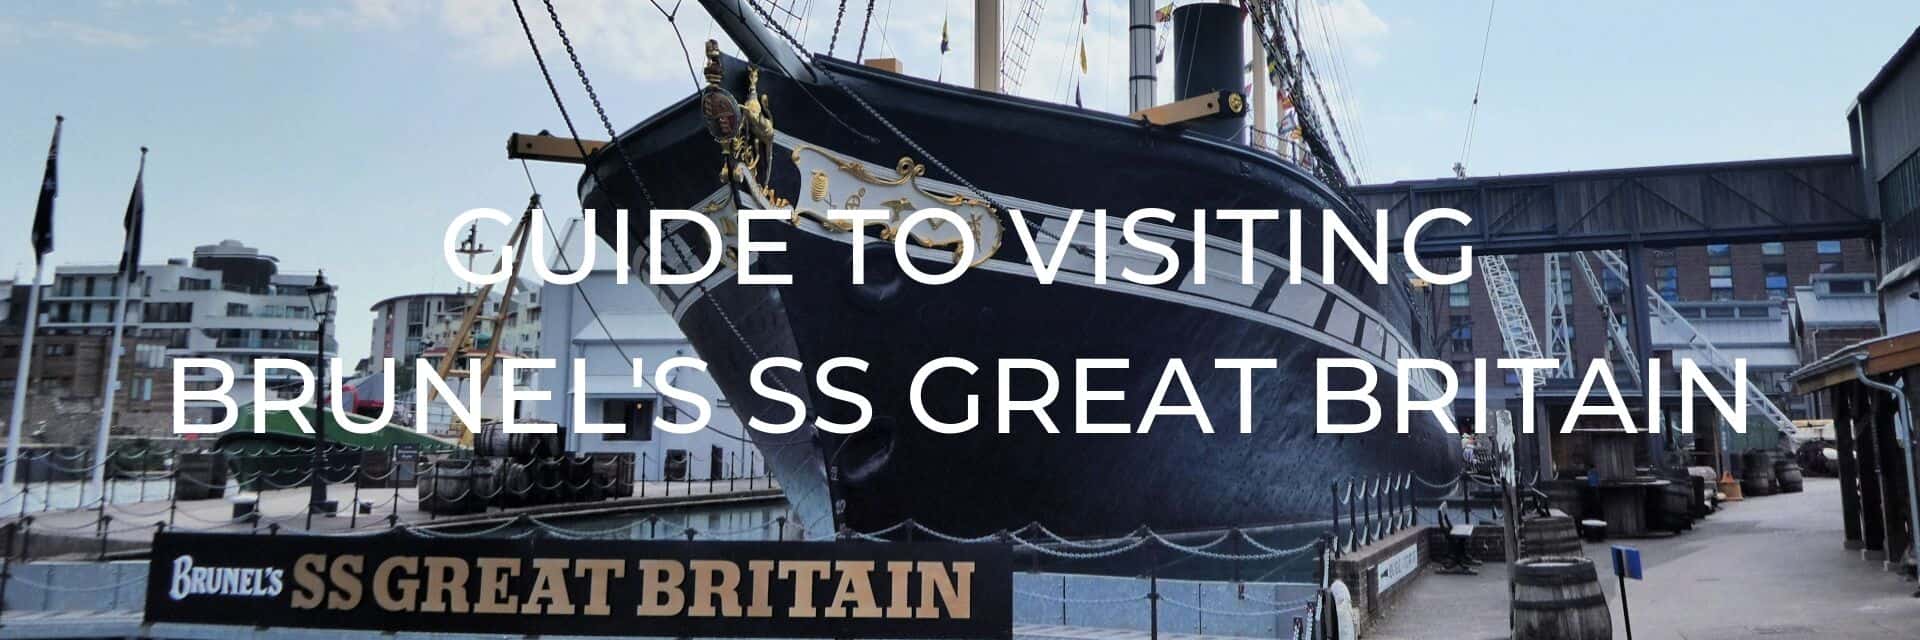 SS Great Britain Desktop Header Image